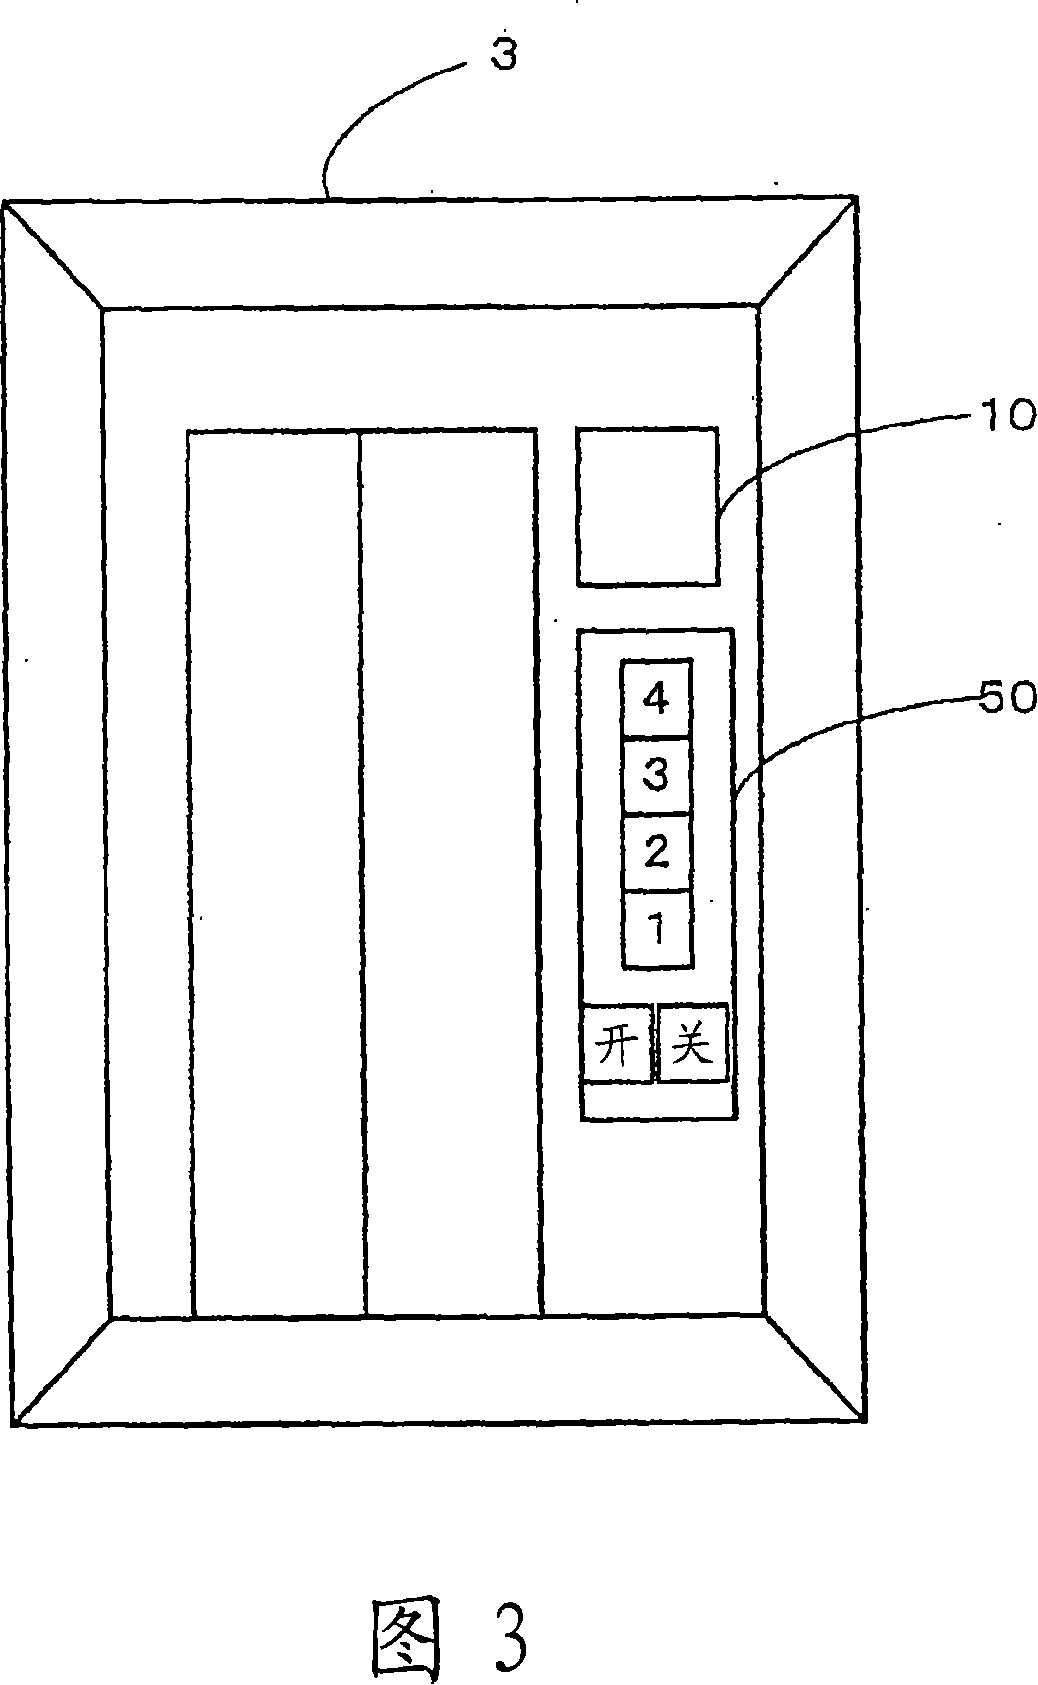 Display equipment of elevator